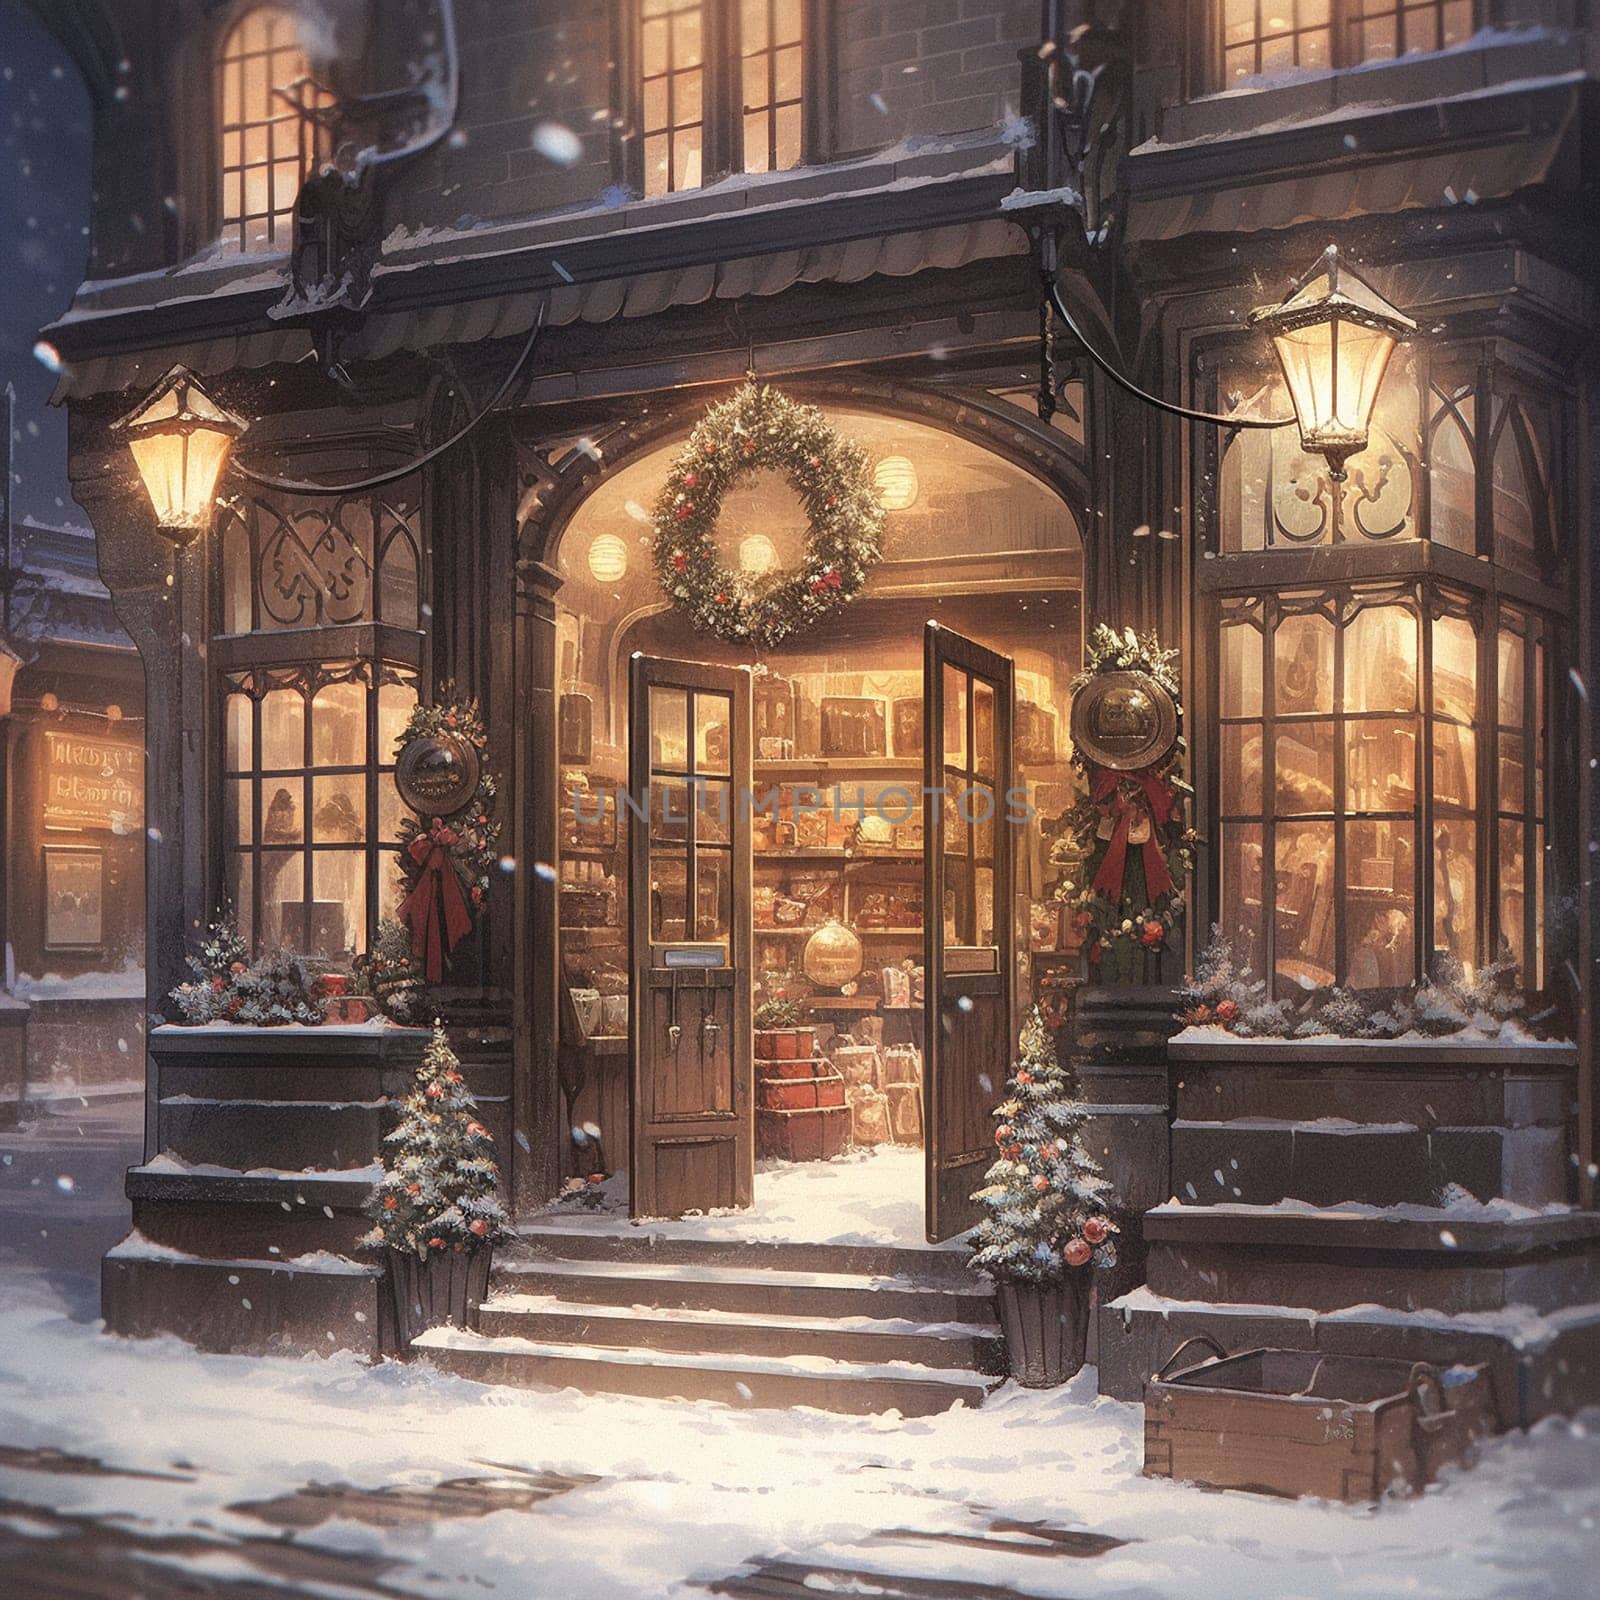 Beautiful Christmas street by NeuroSky